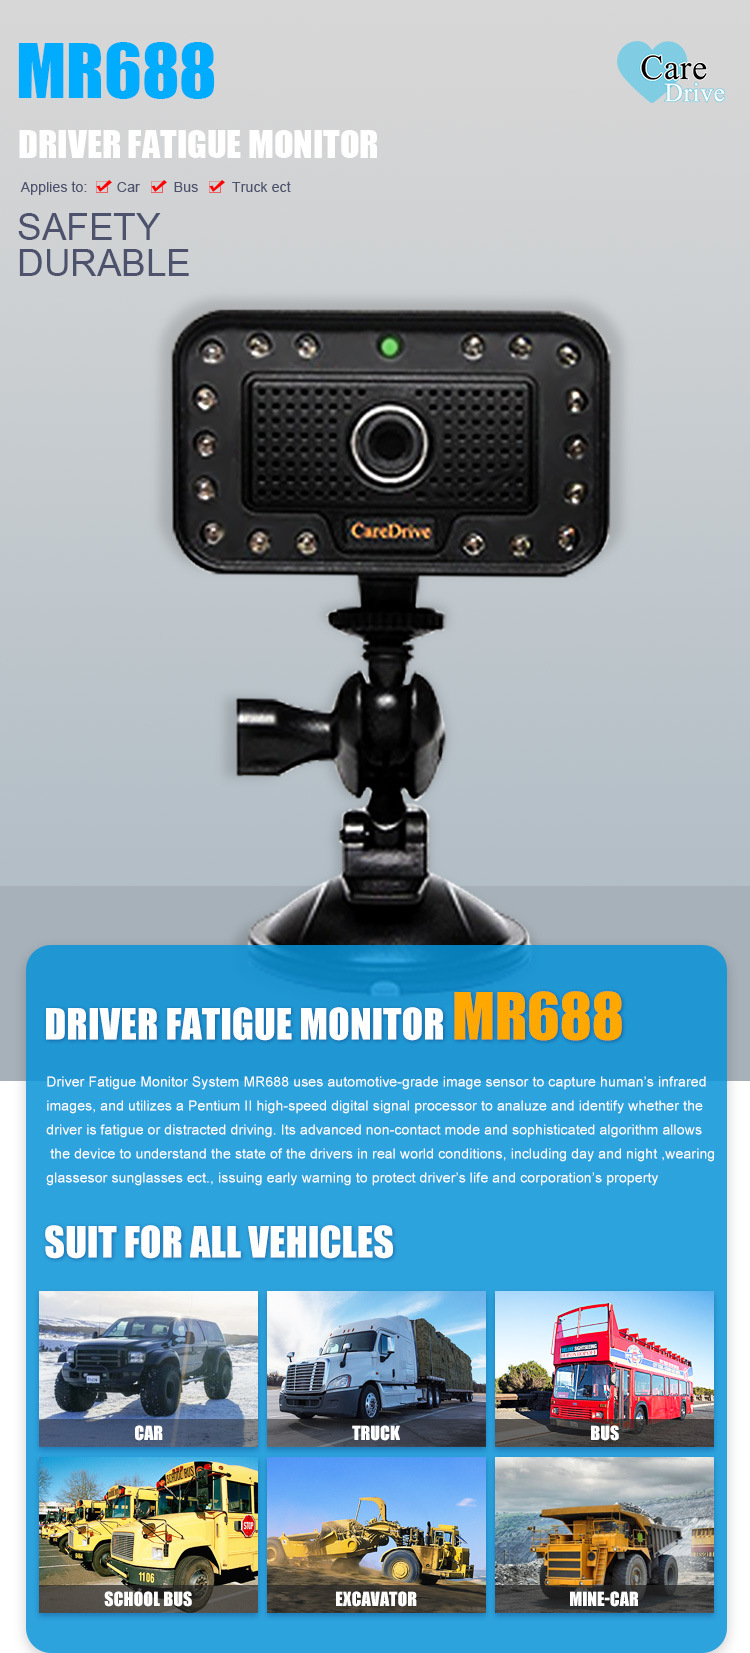 Mr688 Vehicle Speed Limit Alarm, Anti Sleep Car Alarm with Security Camera